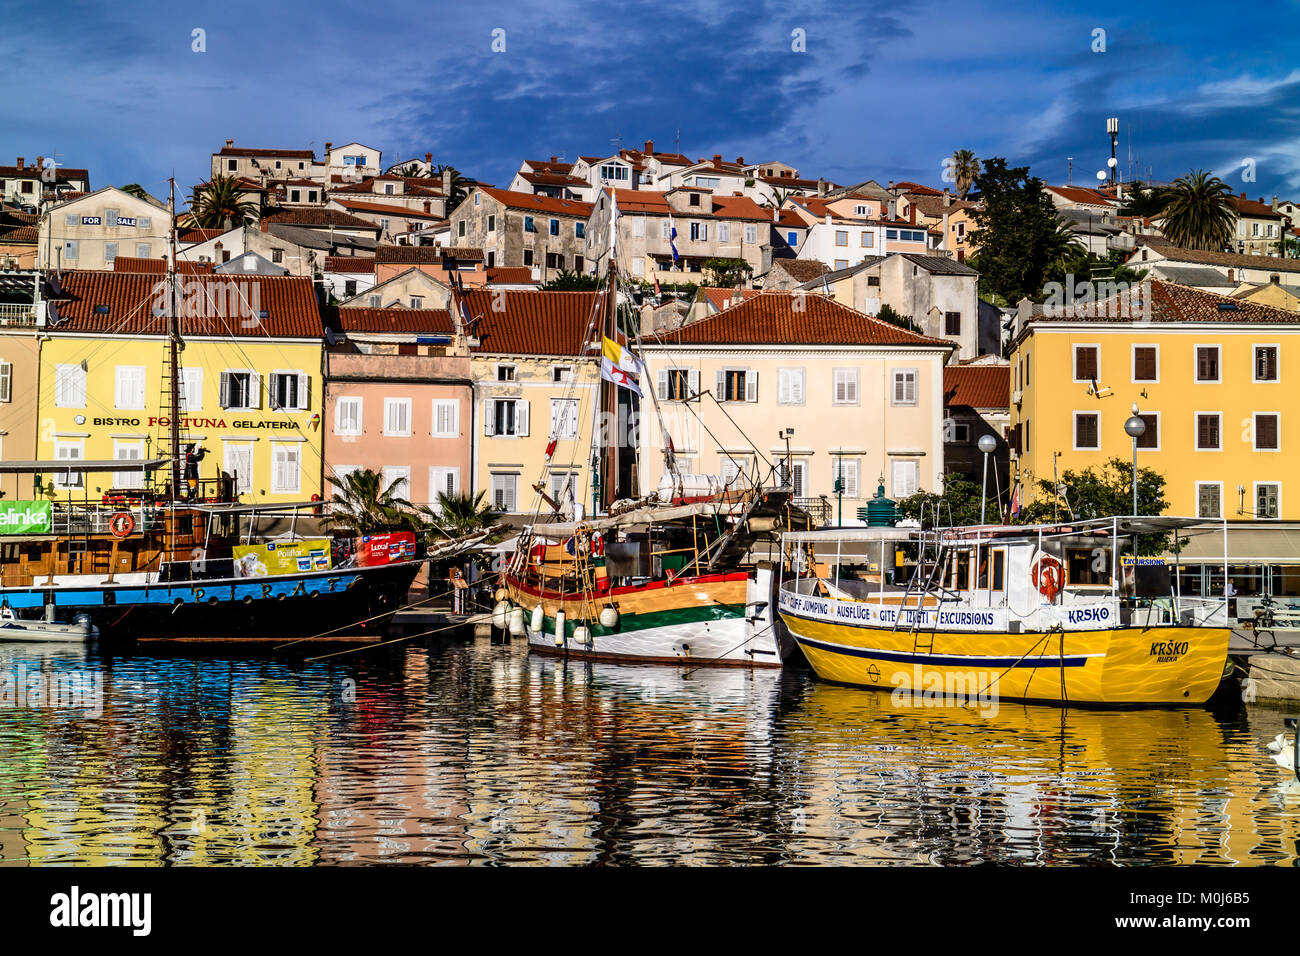 Mali Losinj harbour, island of Losinj, Croatia. May 2017. Stock Photo